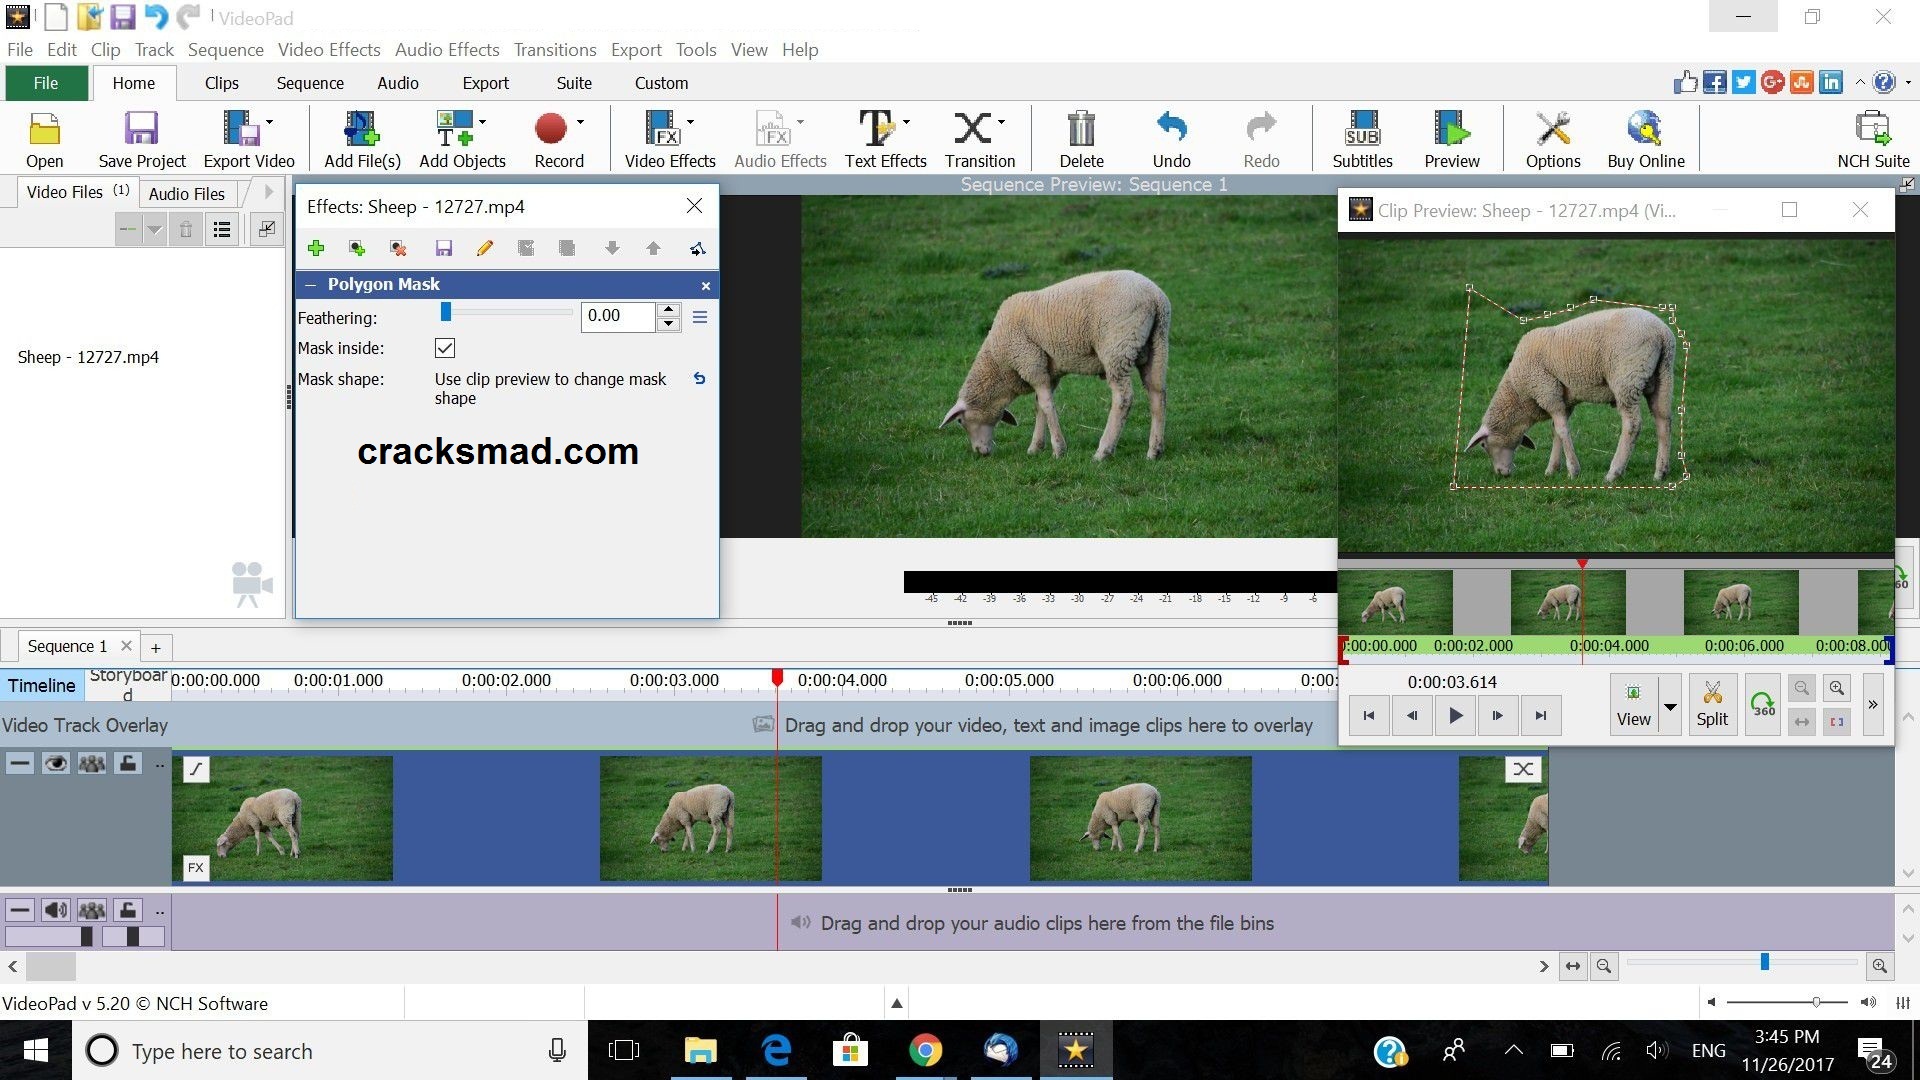 videopad video editor 6.10 code